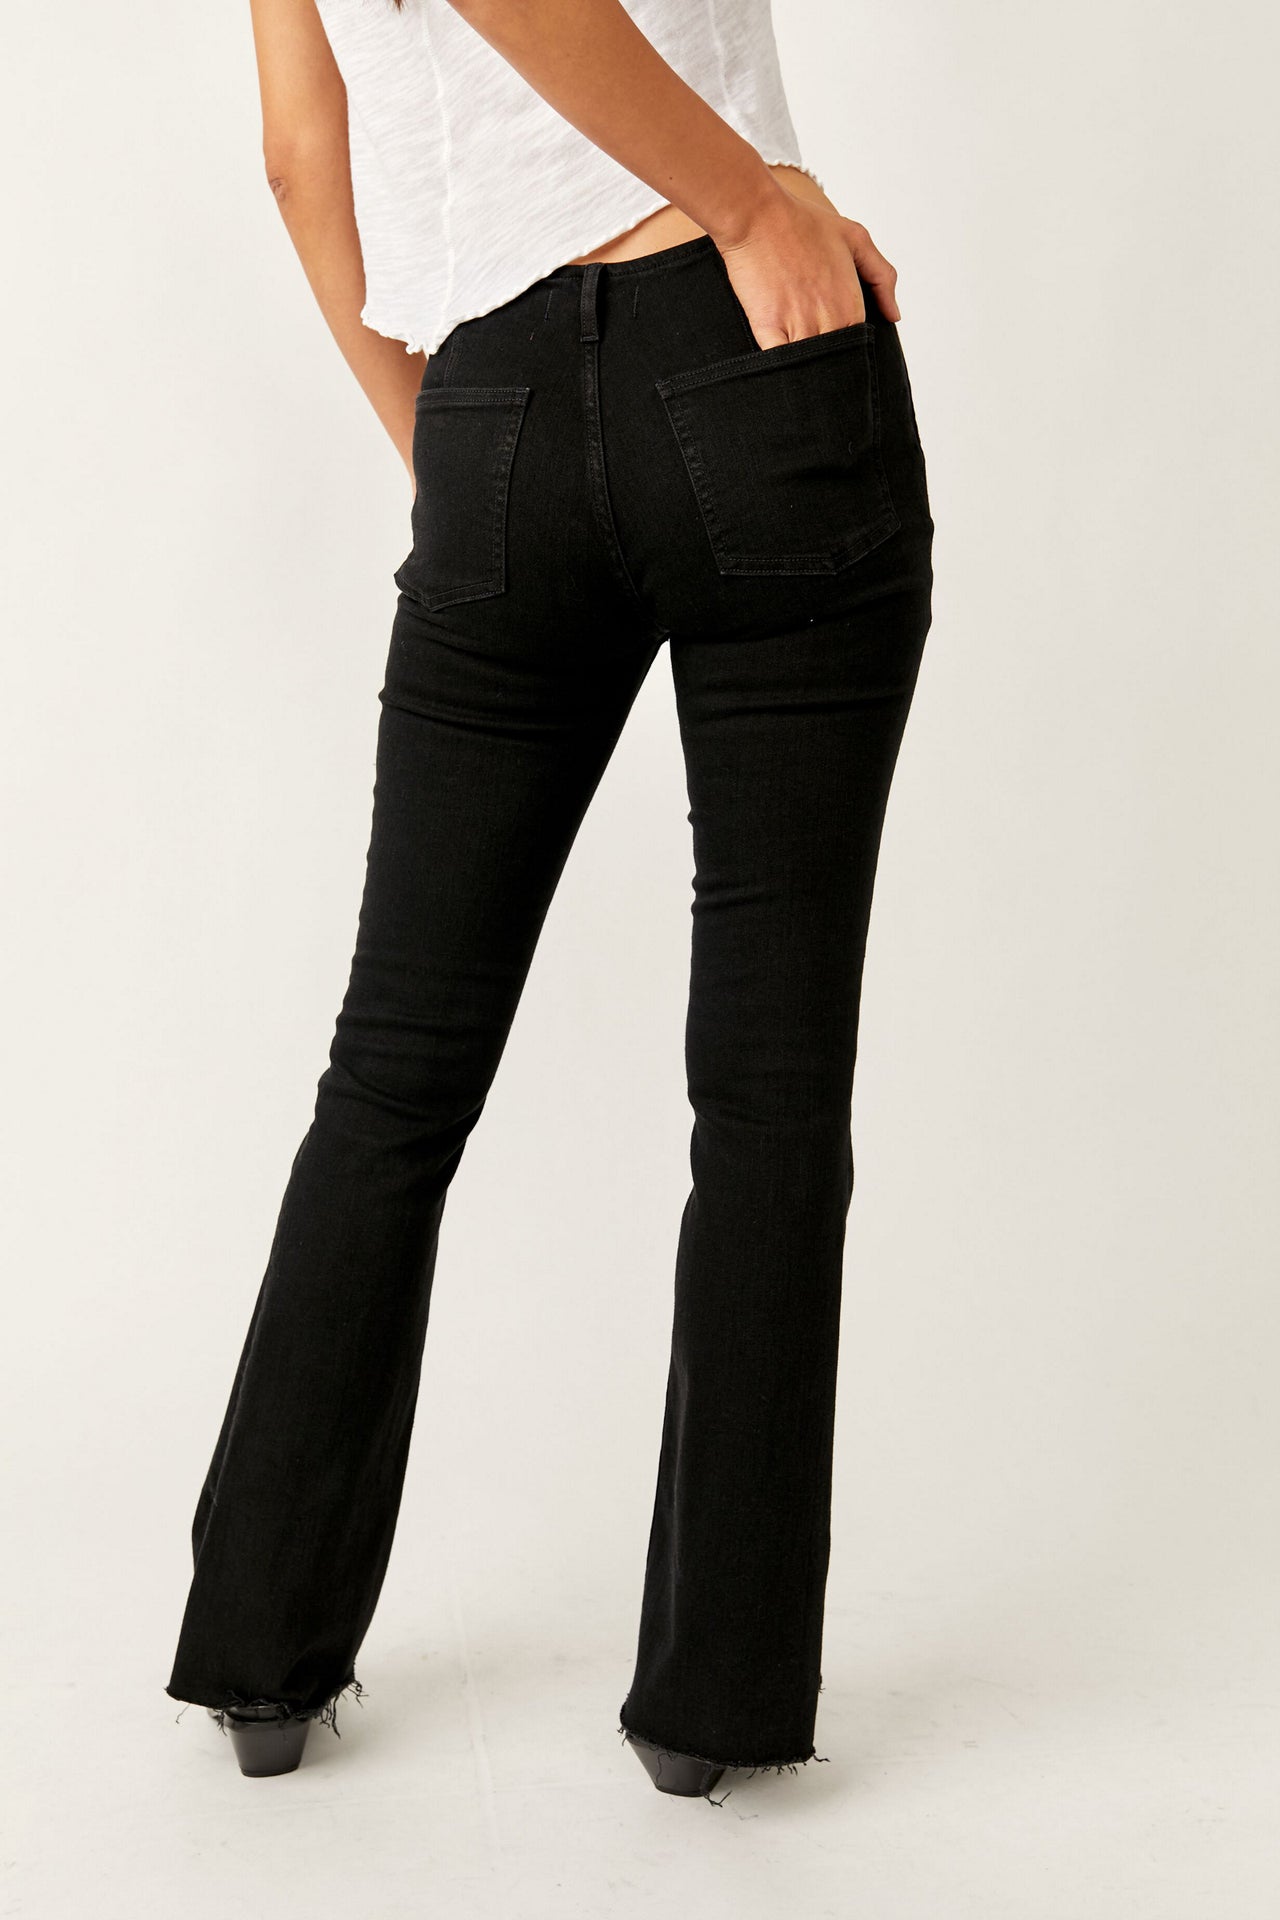 Low Pitch Bootcut Women's Jeans - Black